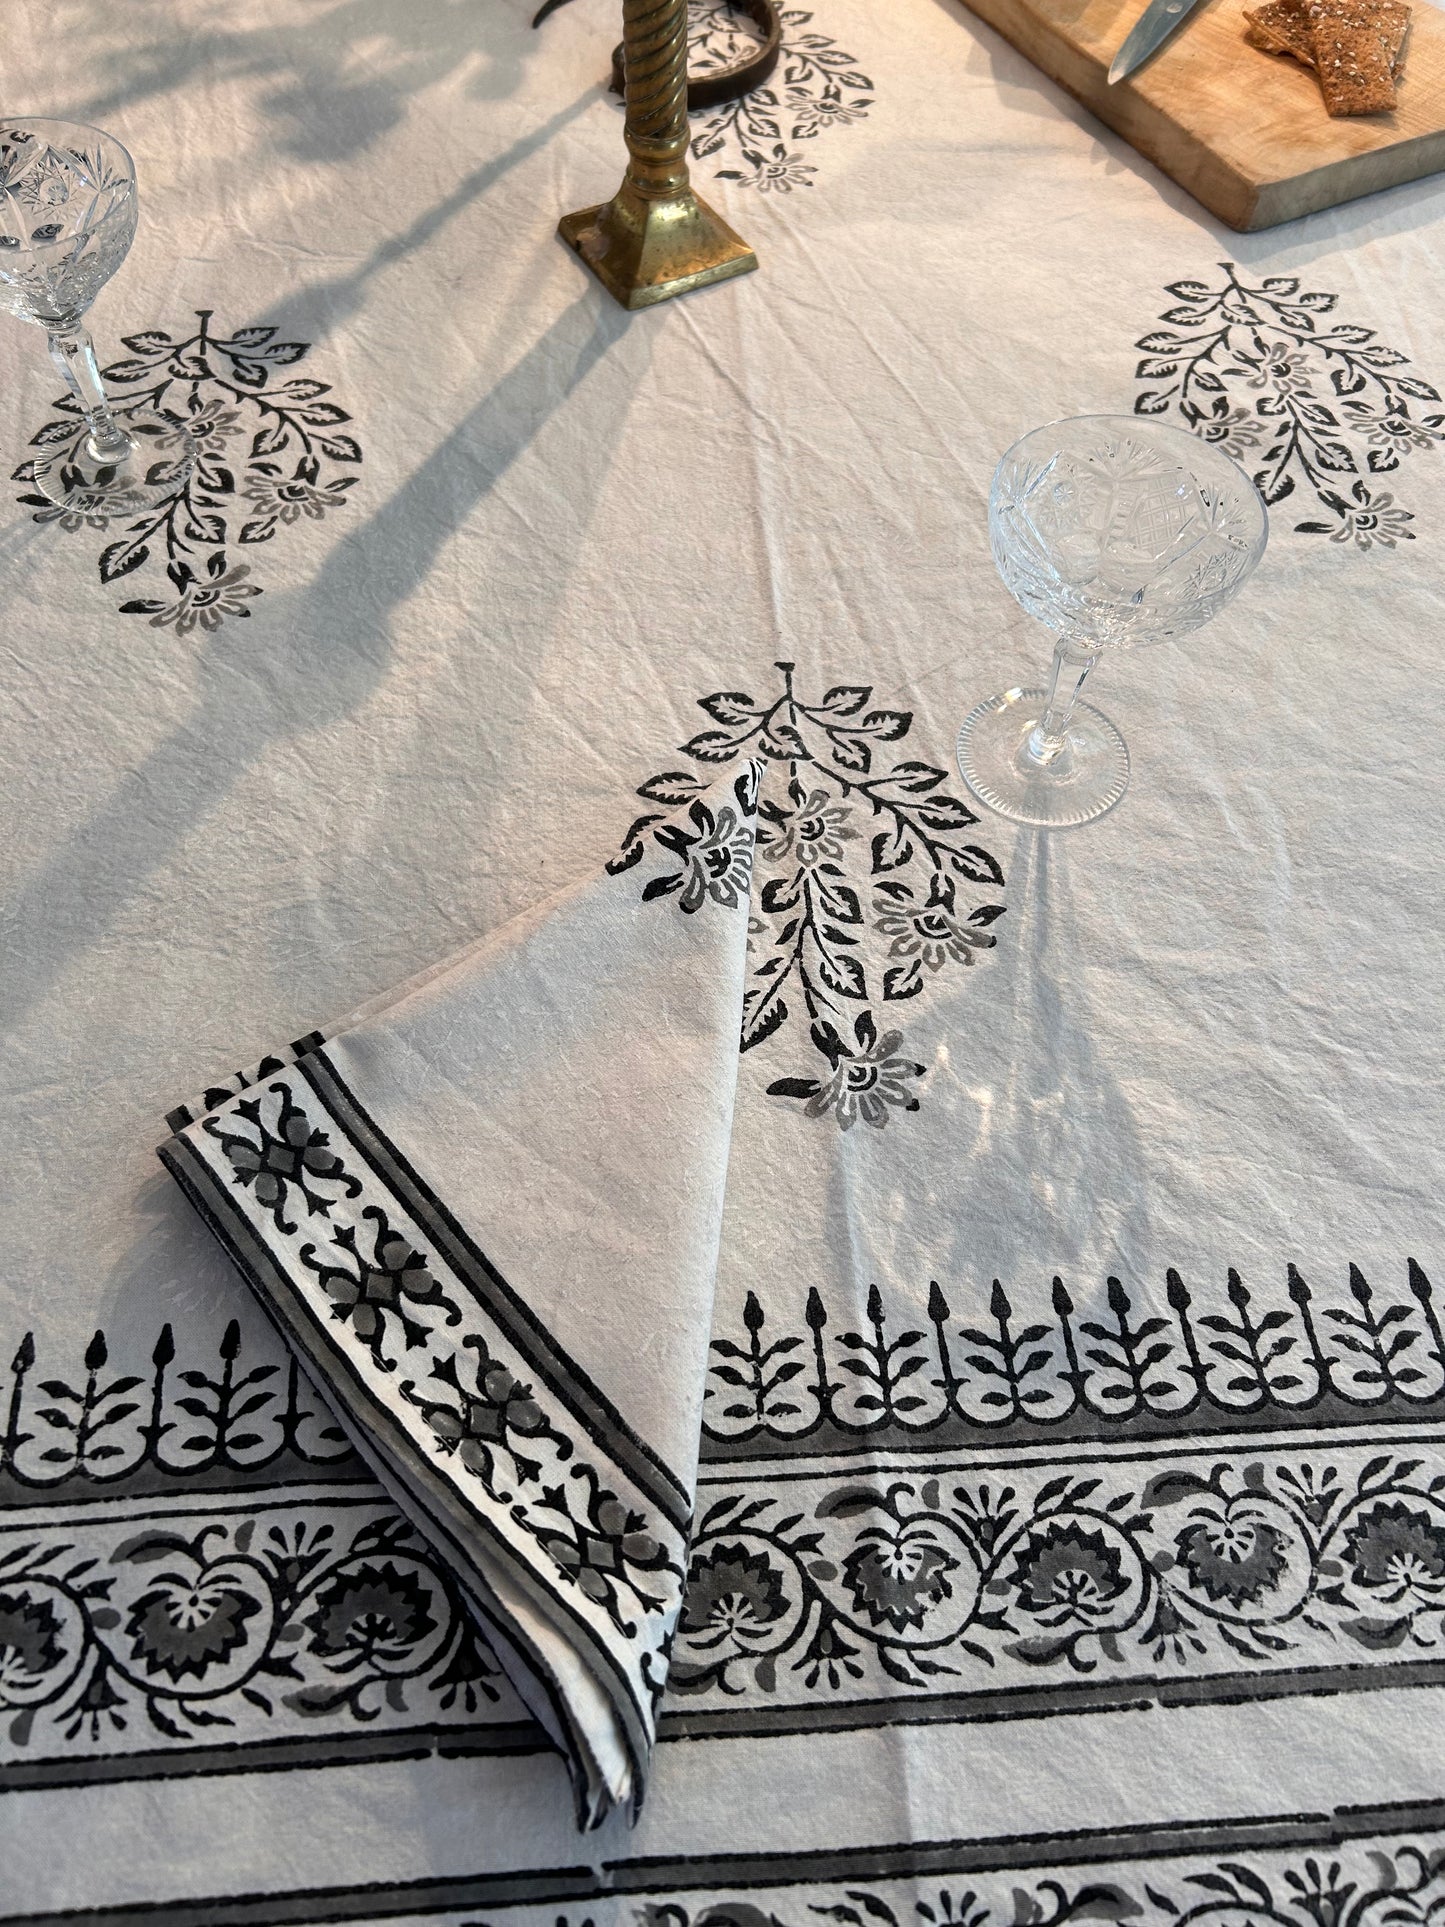 Tablecloth & Napkin Set